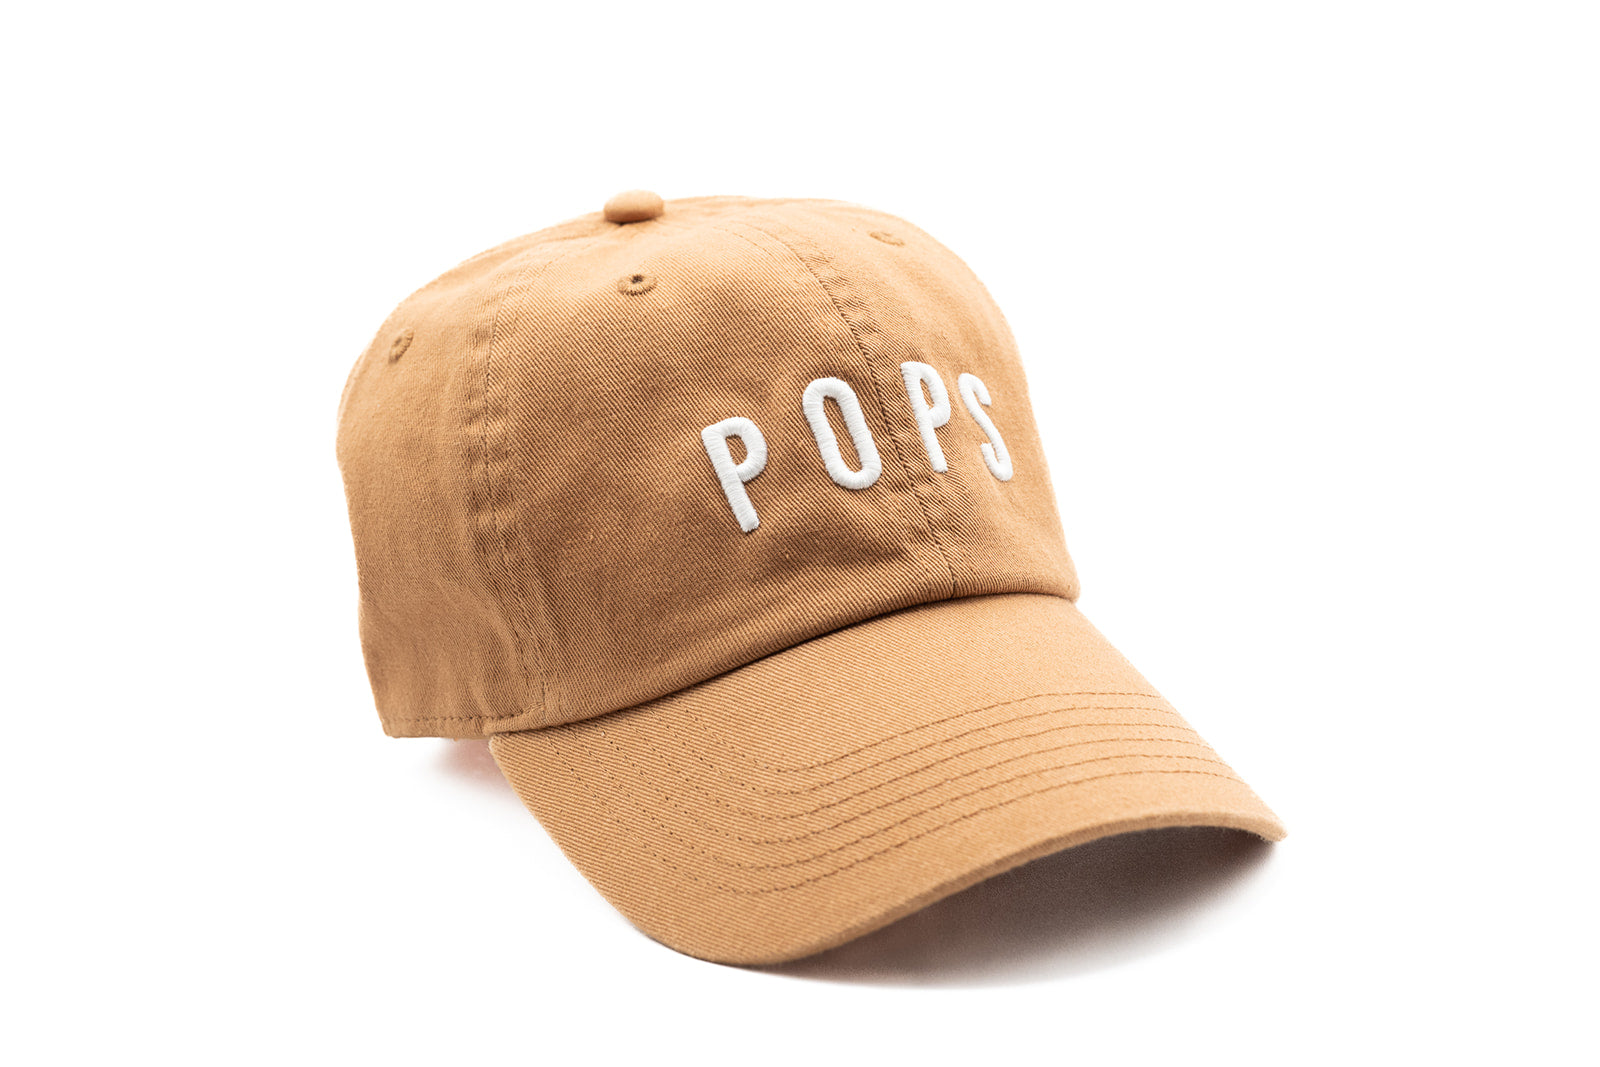 Terra Cotta Pops Hat